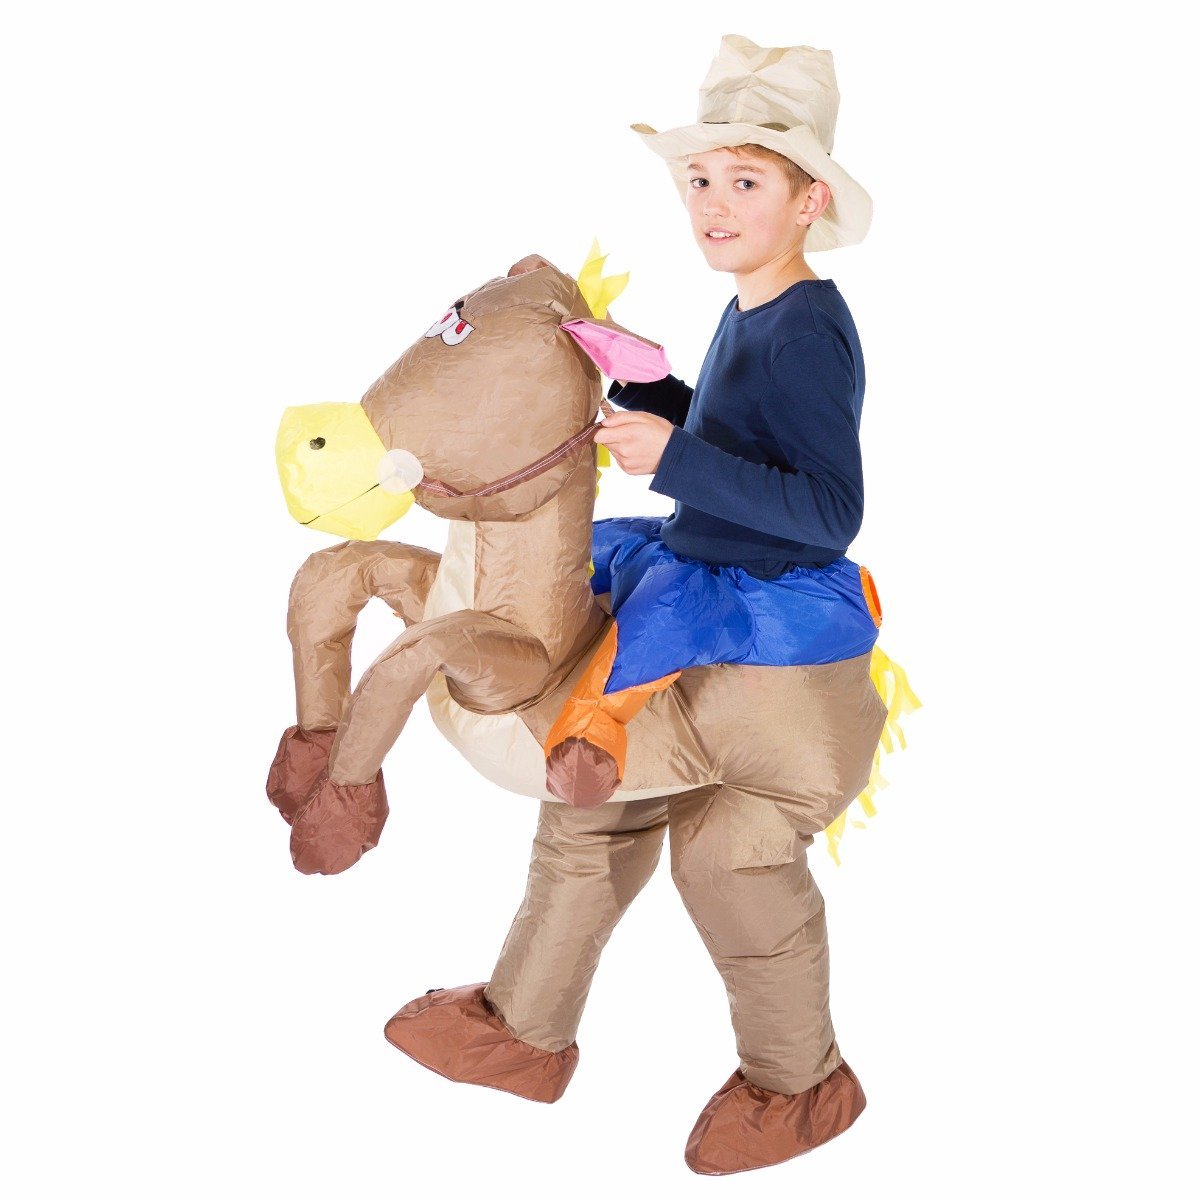 Bodysocks - Kids Inflatable Cowboy Costume